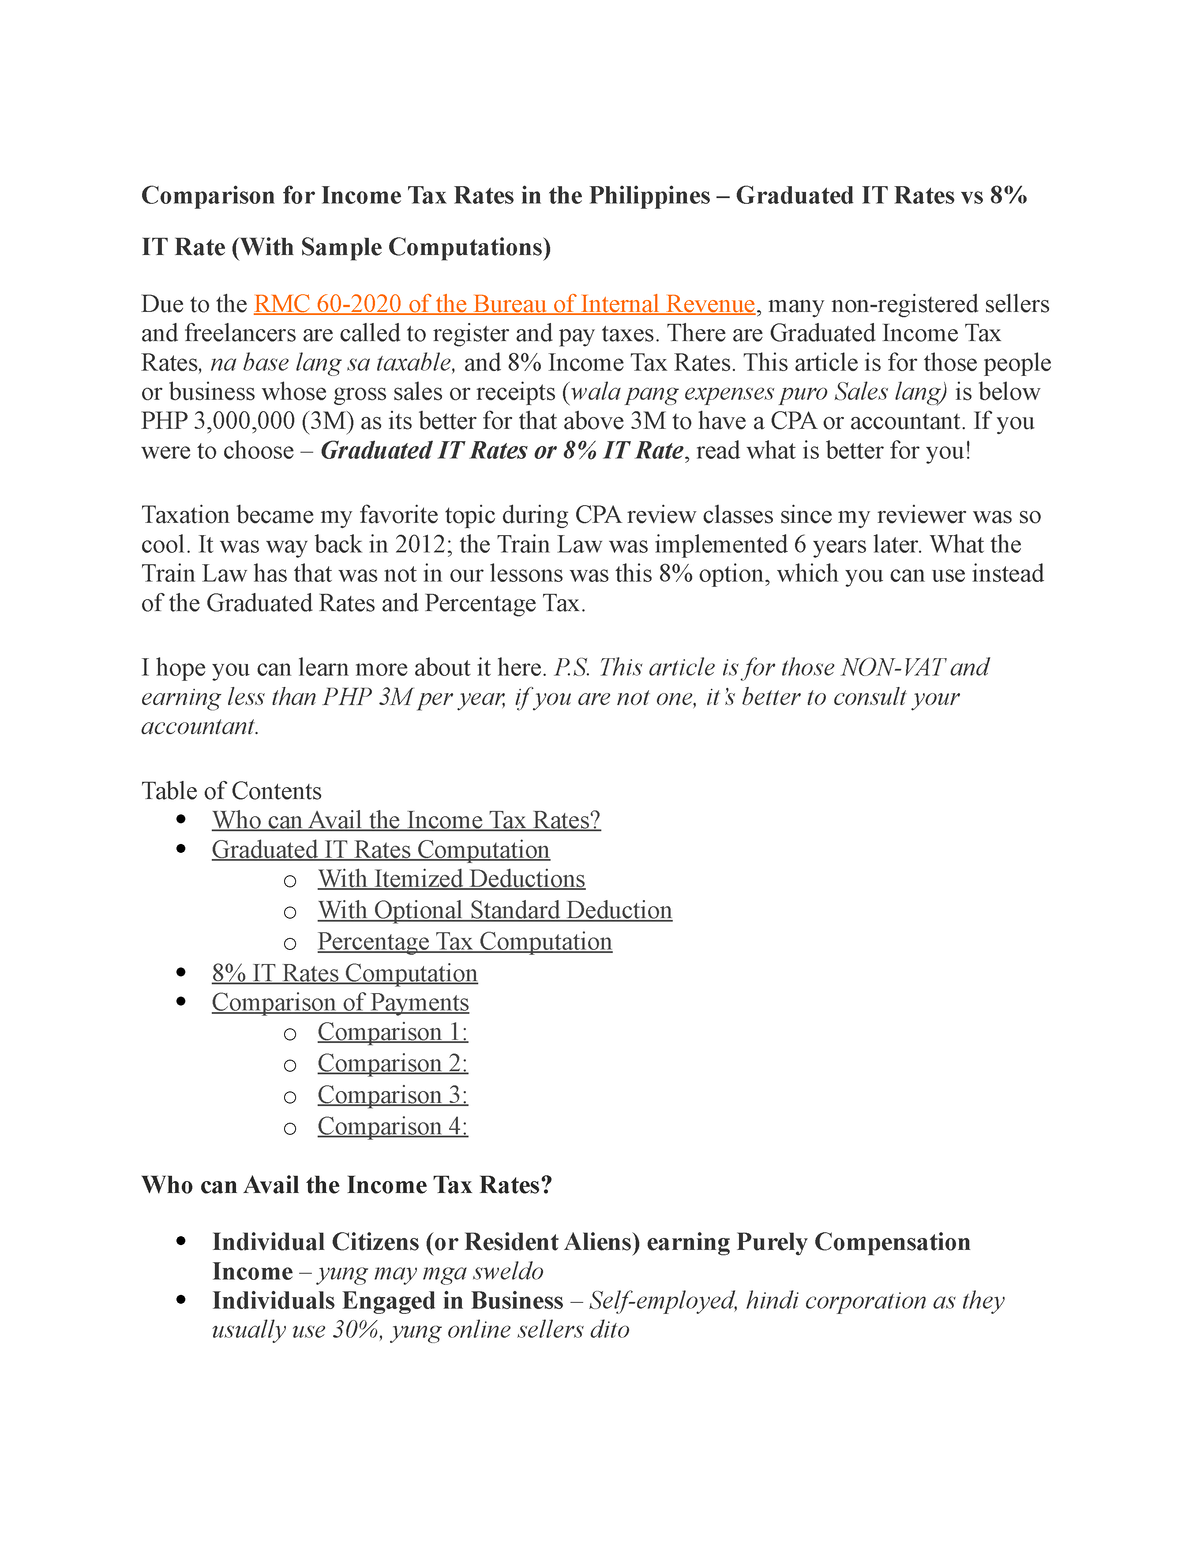 comparison-for-income-tax-rates-in-the-philippines-comparison-for